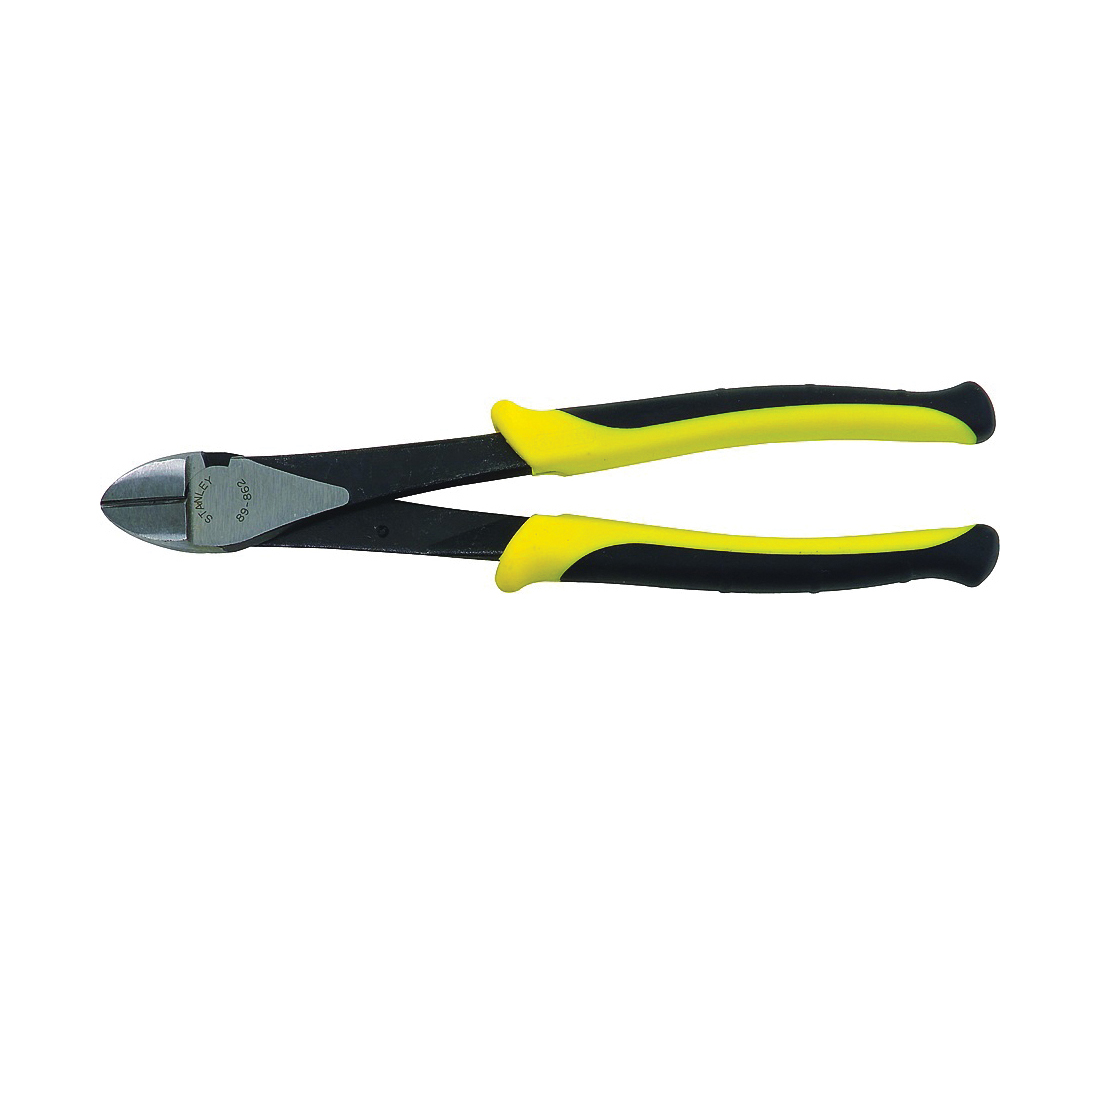 89-862 Diagonal Cutting Plier, 10 in OAL, 1/2 in Cutting Capacity, Black/Yellow Handle, Ergonomic Handle